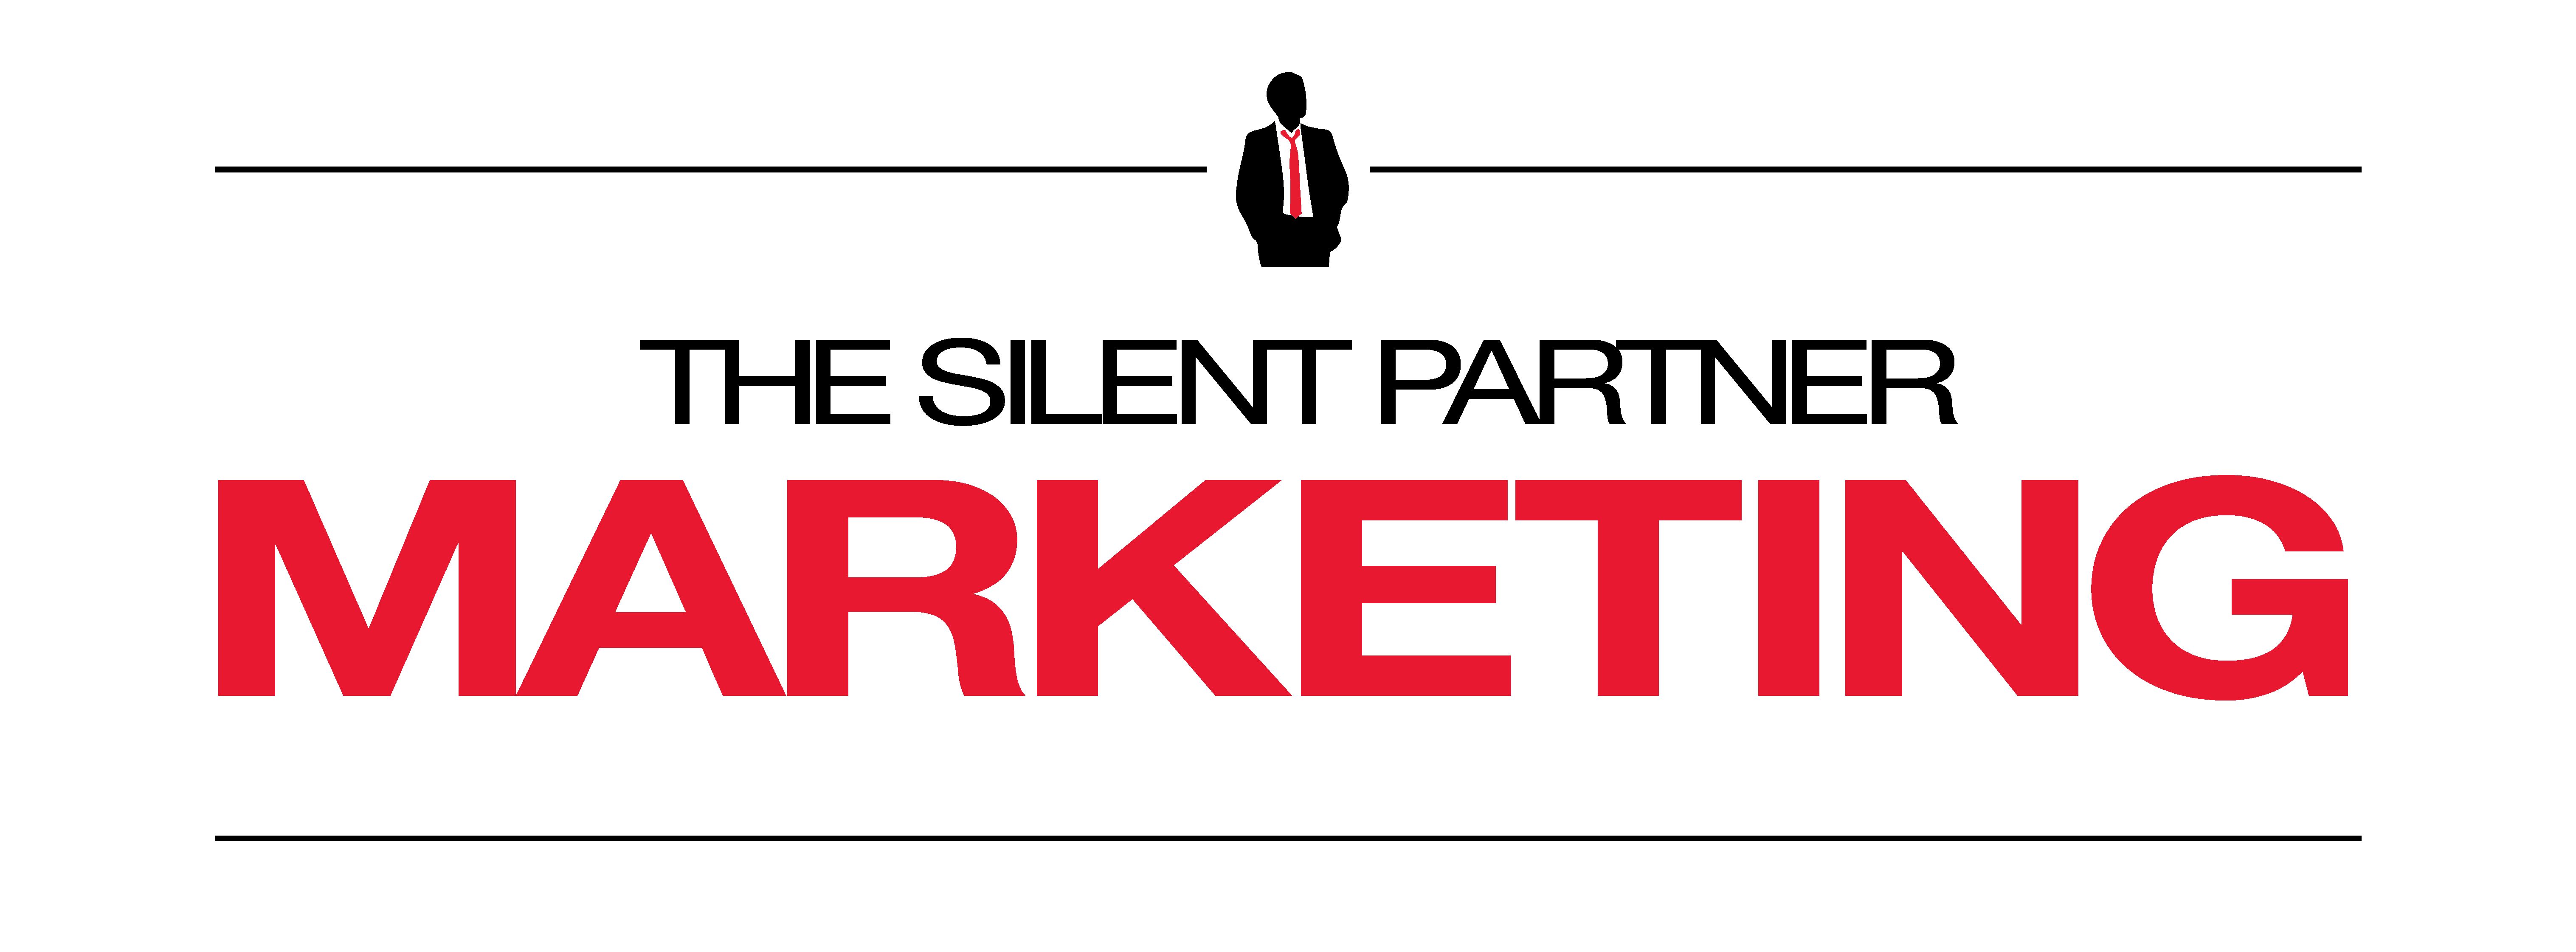 The Silent Partner Marketing